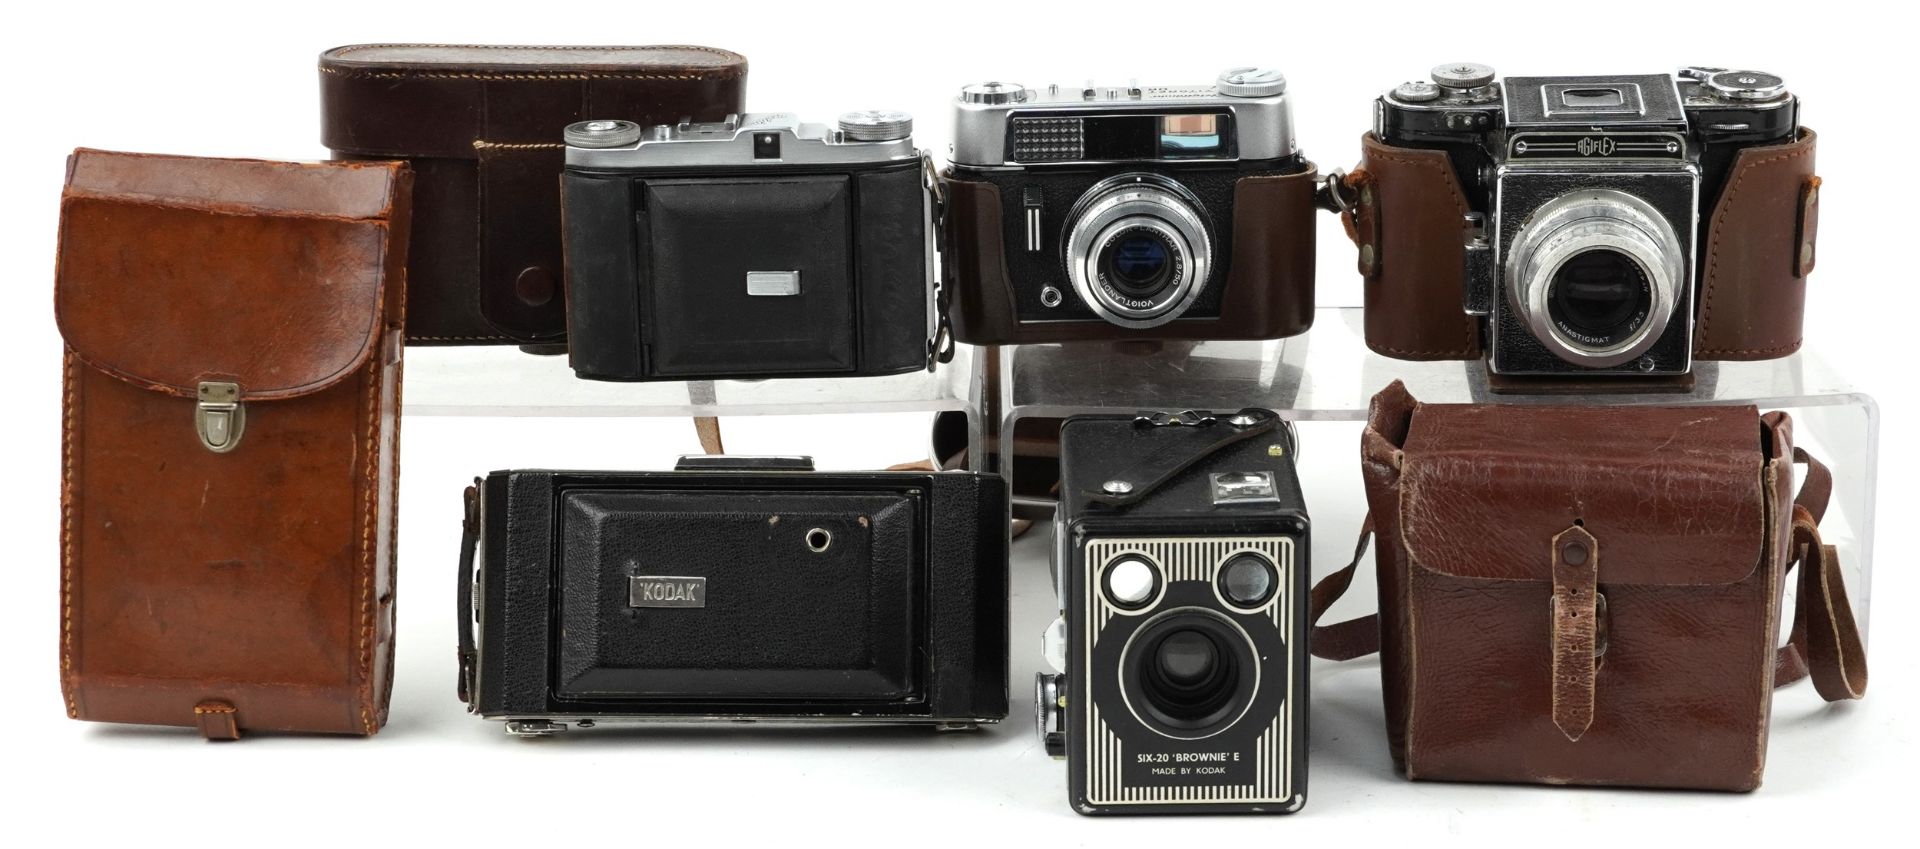 Five vintage cameras with cases including Agiflex, Voigtlander, Balda and Kodak : For further